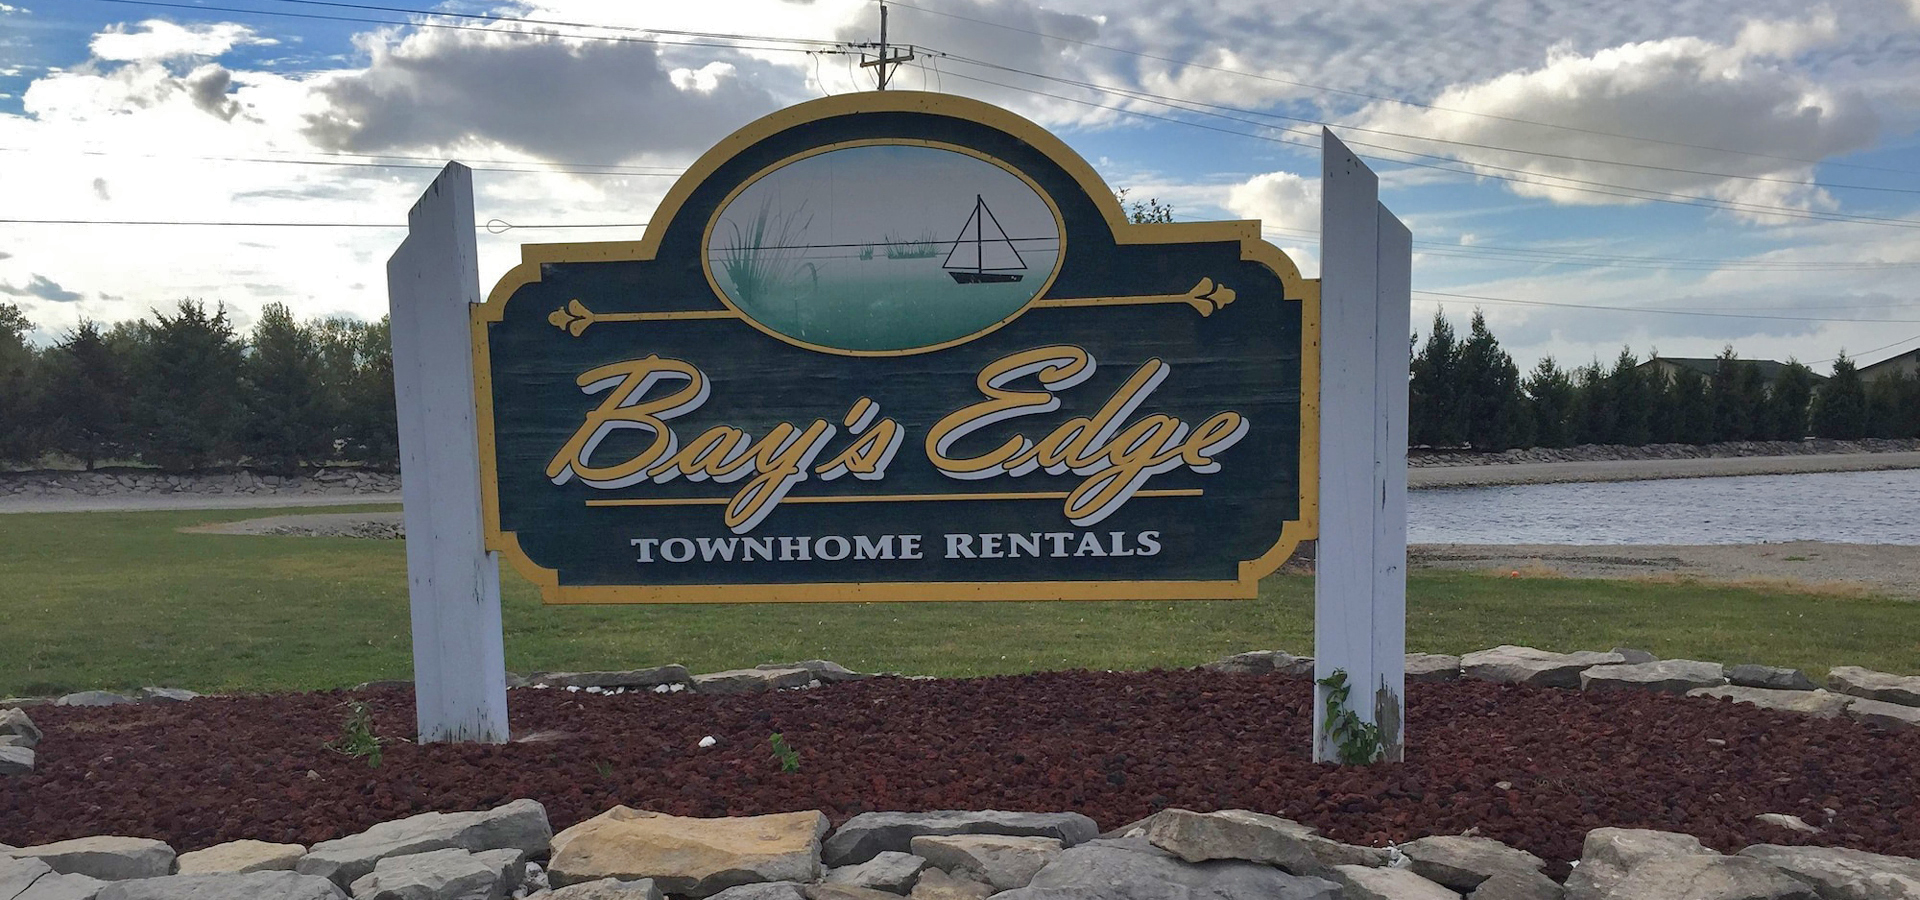 Bays Edge Bait & Tackle Shop - Lake Erie Restaurant and